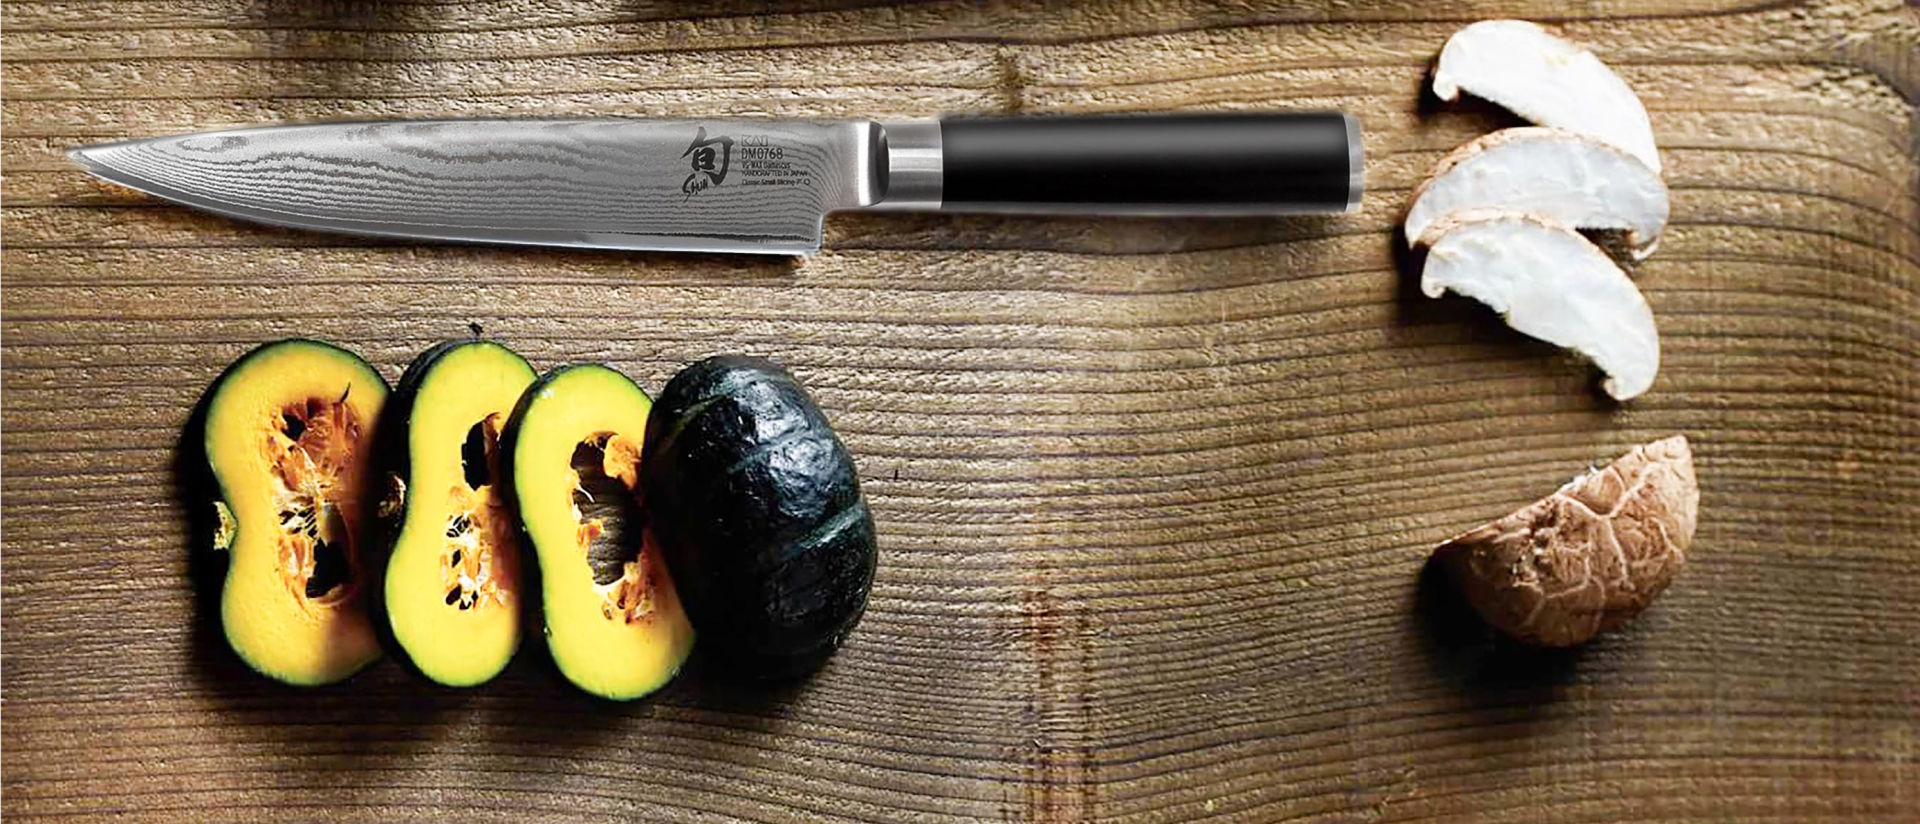 KAI Shun Classic - Small slicing knife (7“) #3